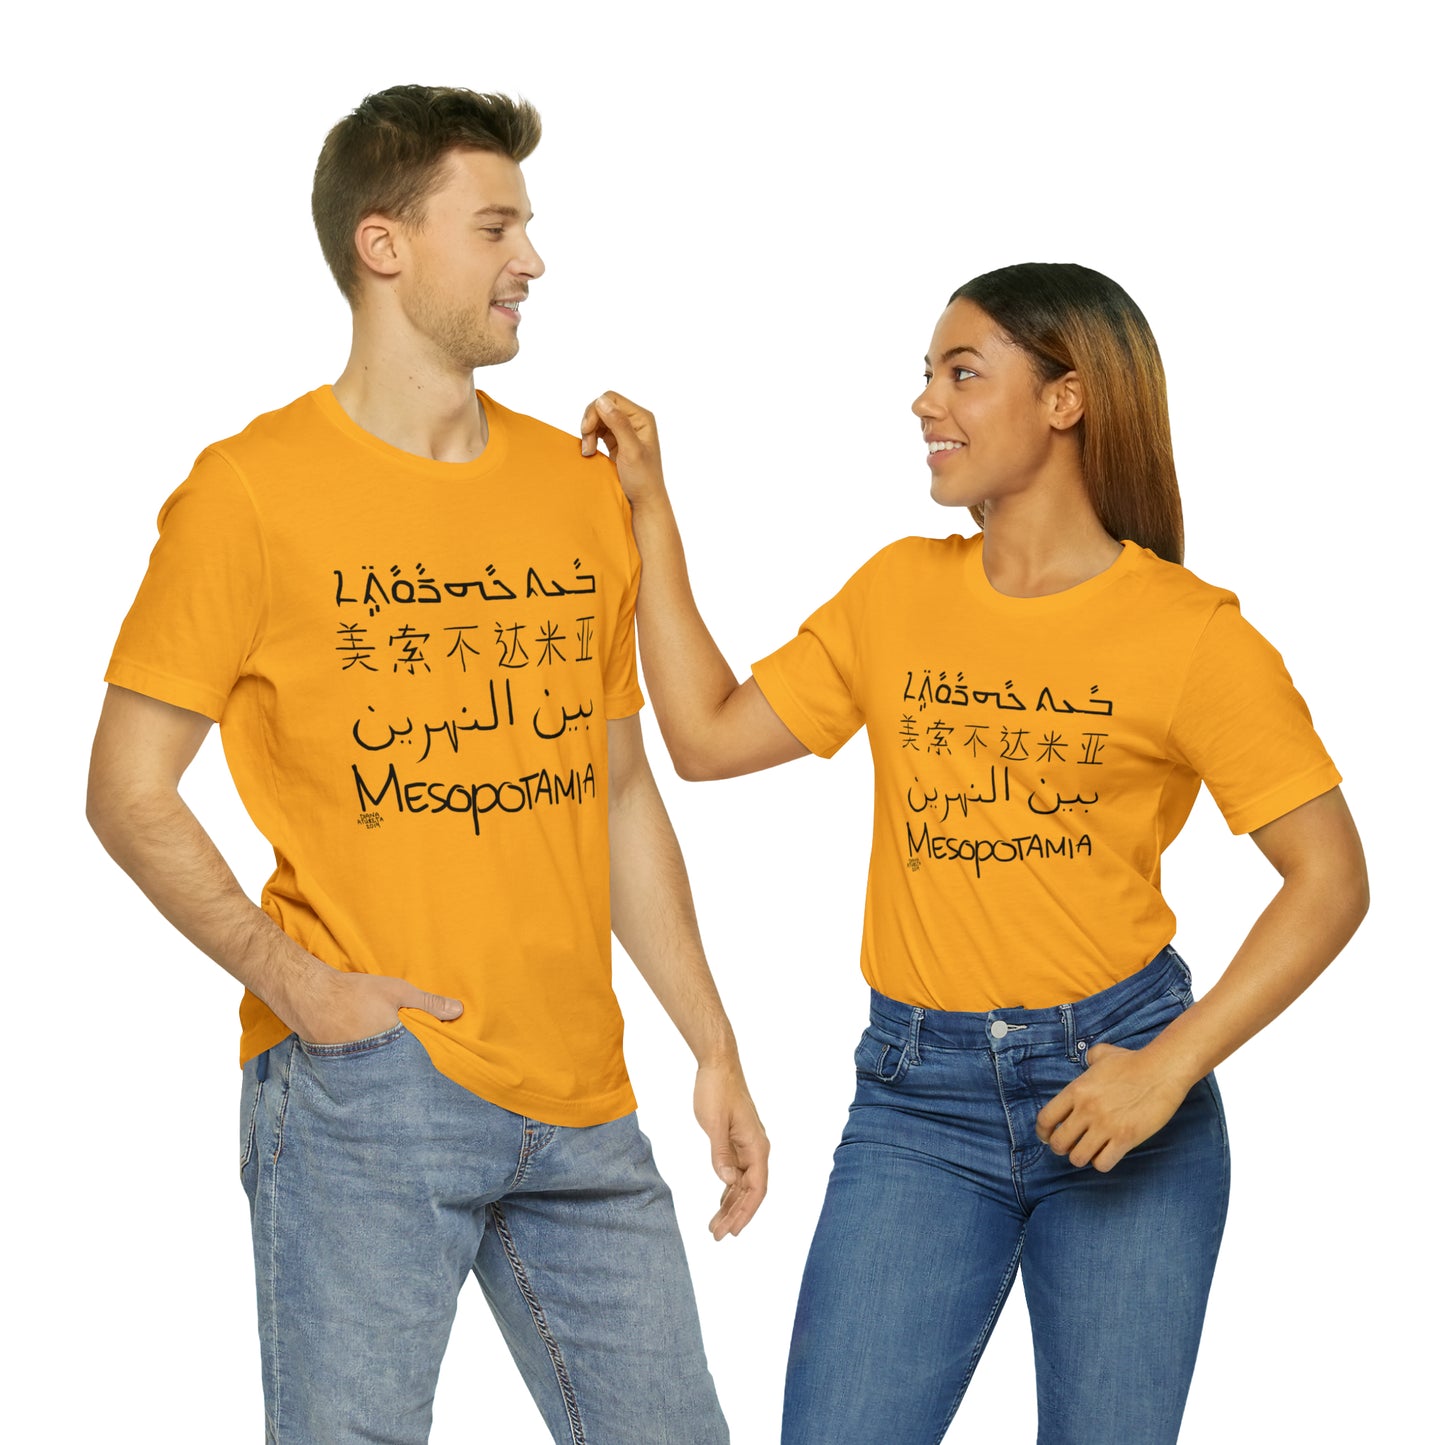 Mesopotamia Rosetta - Unisex Cotton T-Shirt